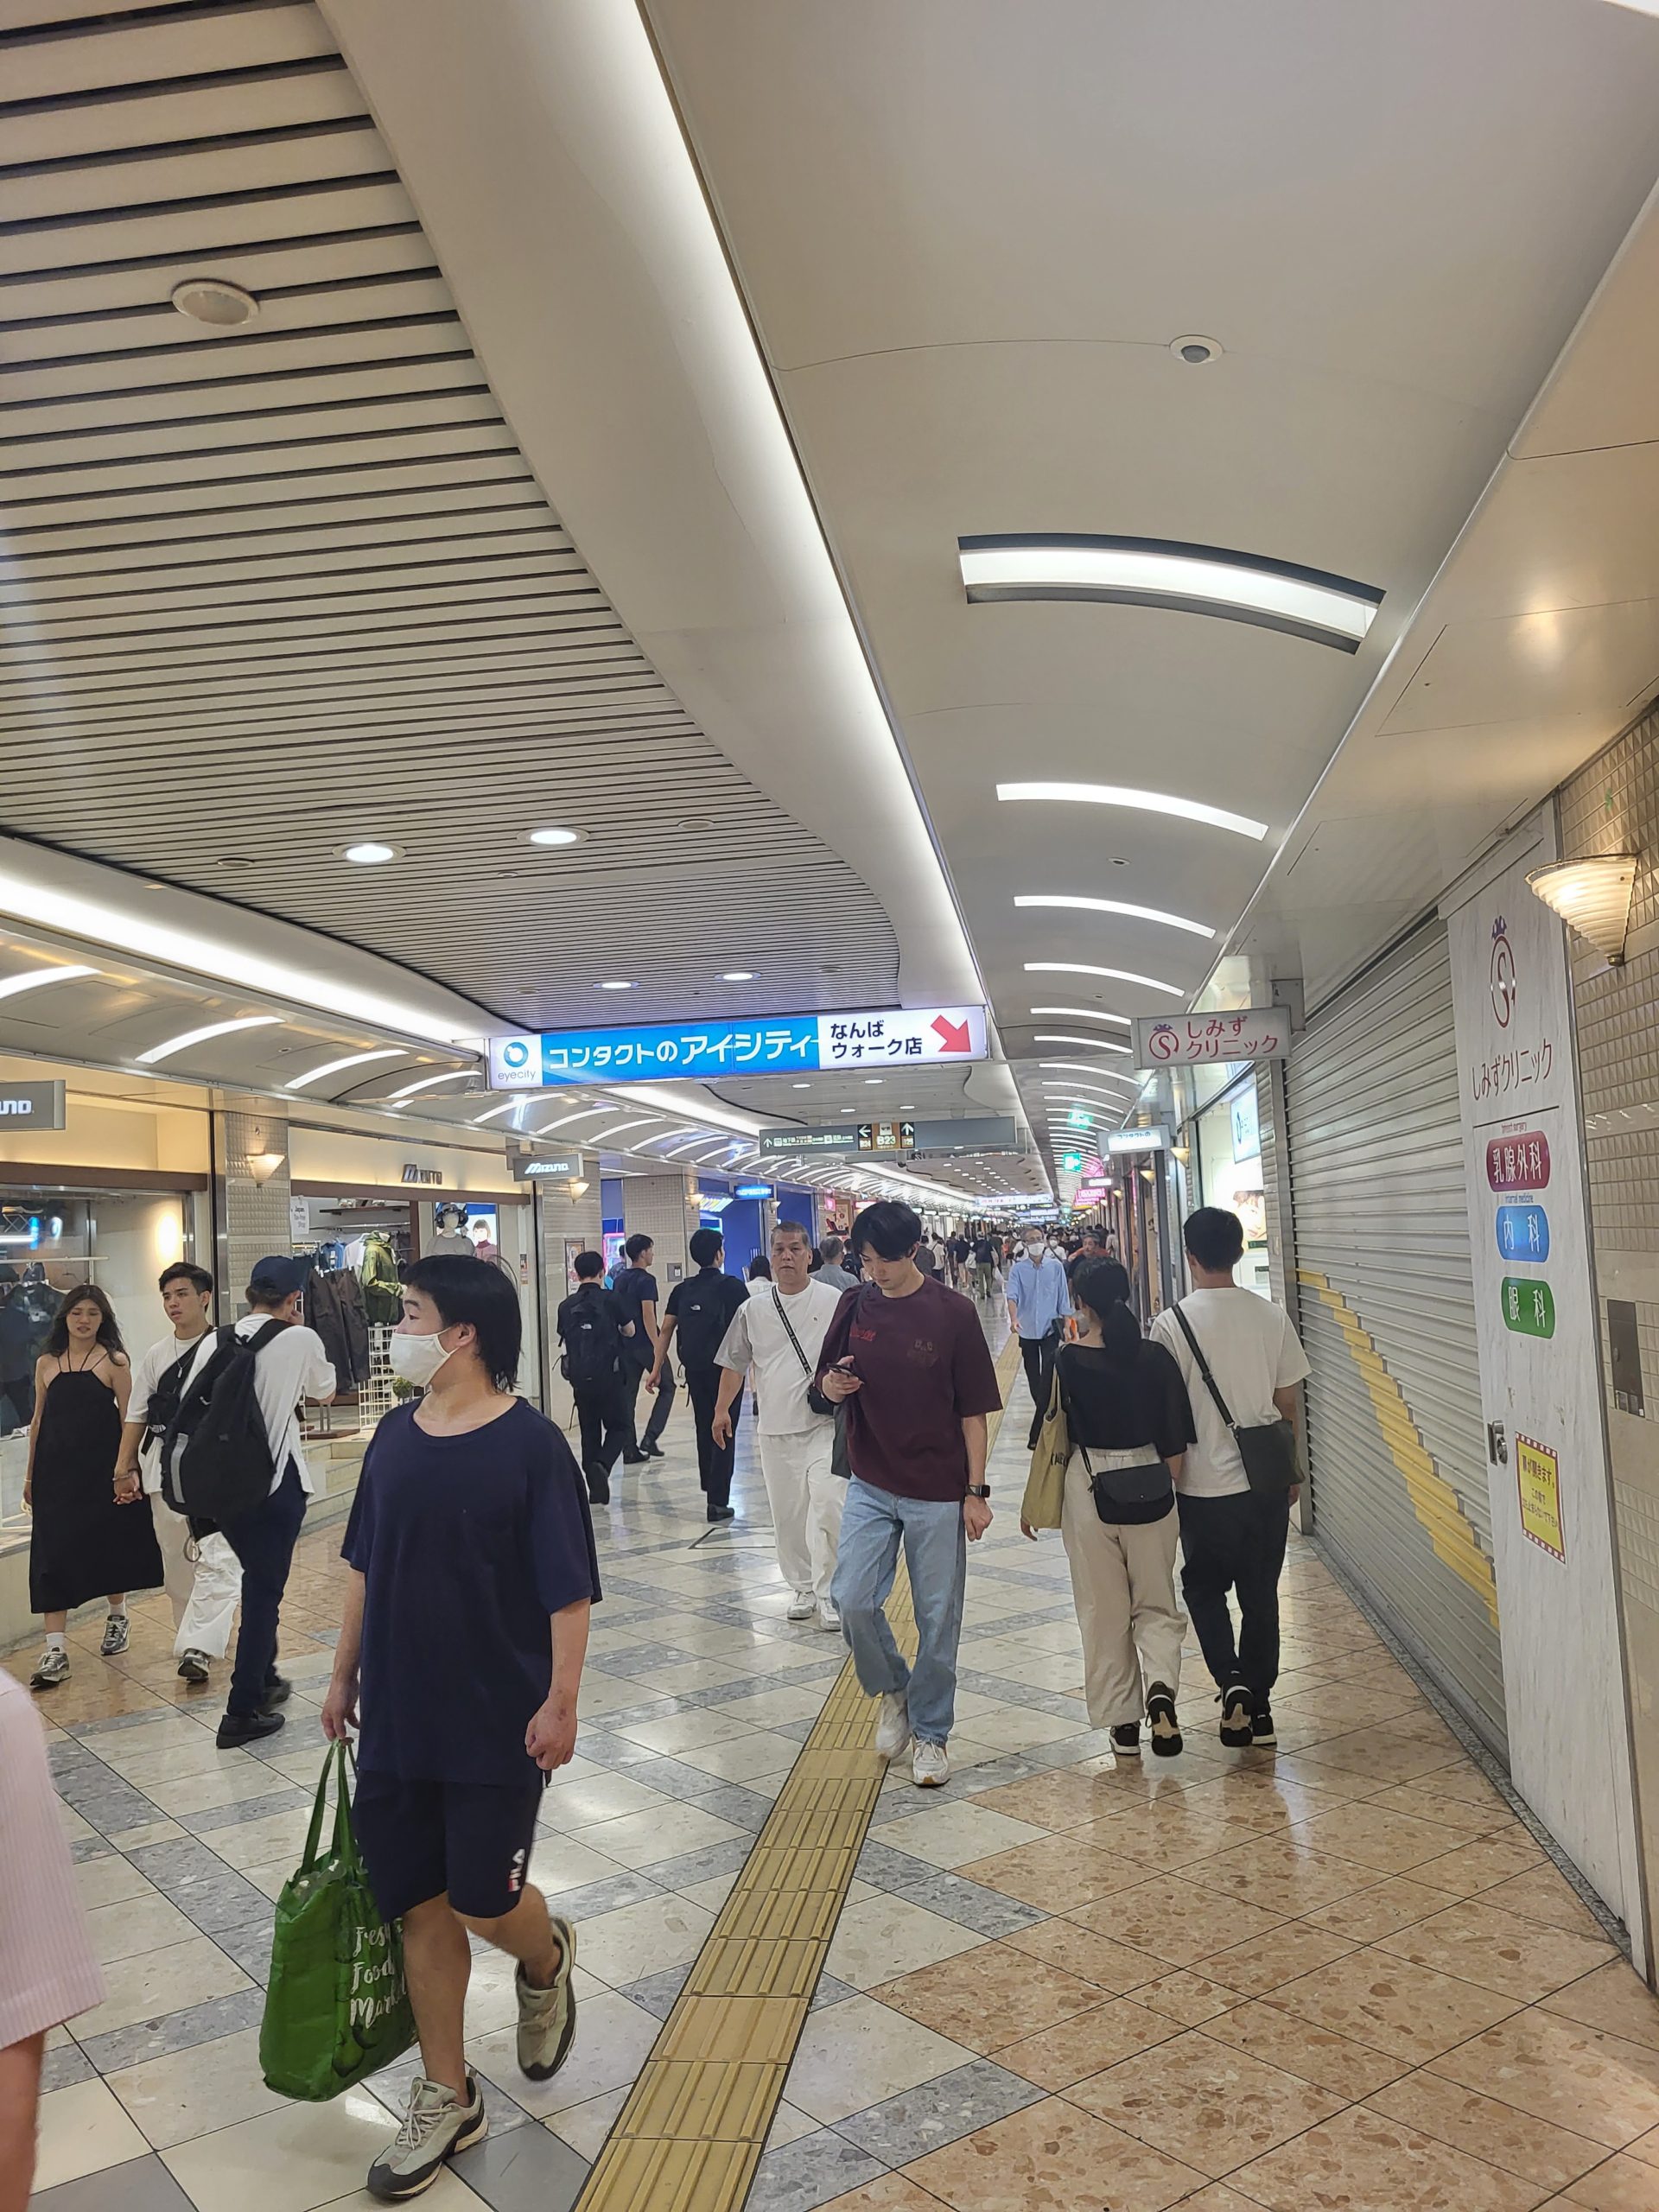 Underground metro/shopping